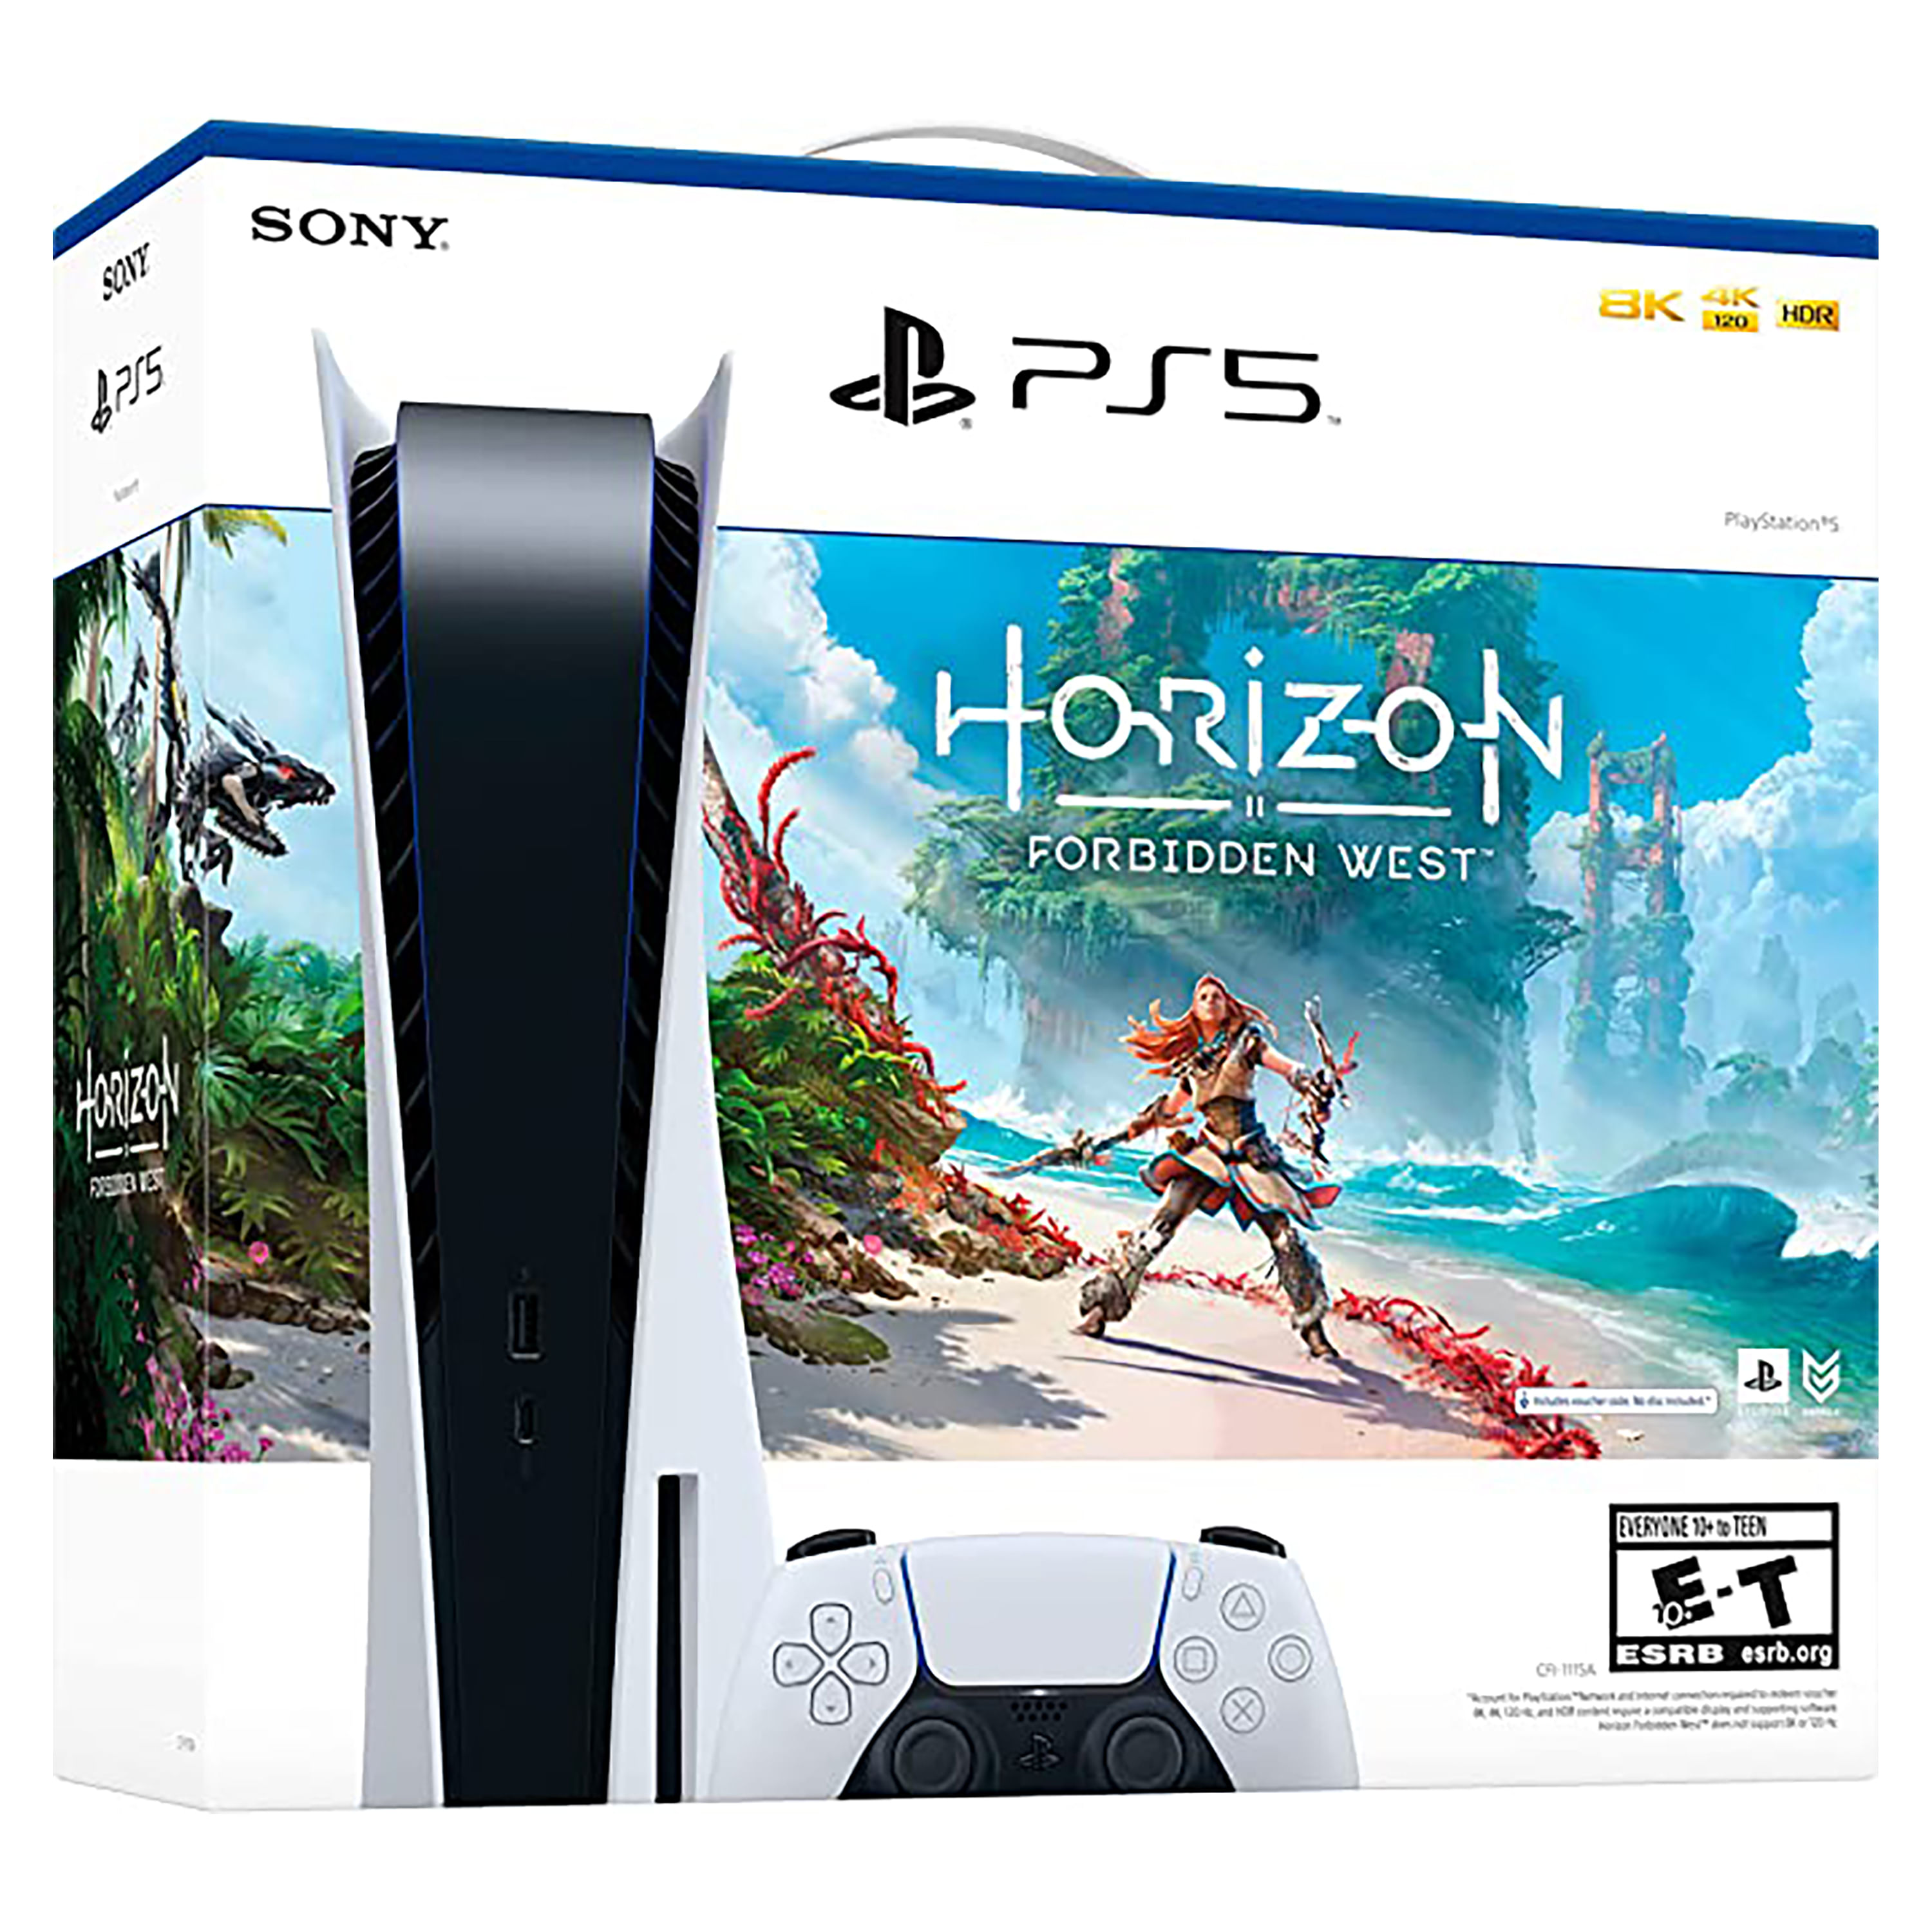 Comprar Consola PlayStation 5 Sony, Horizontal Forbidden West